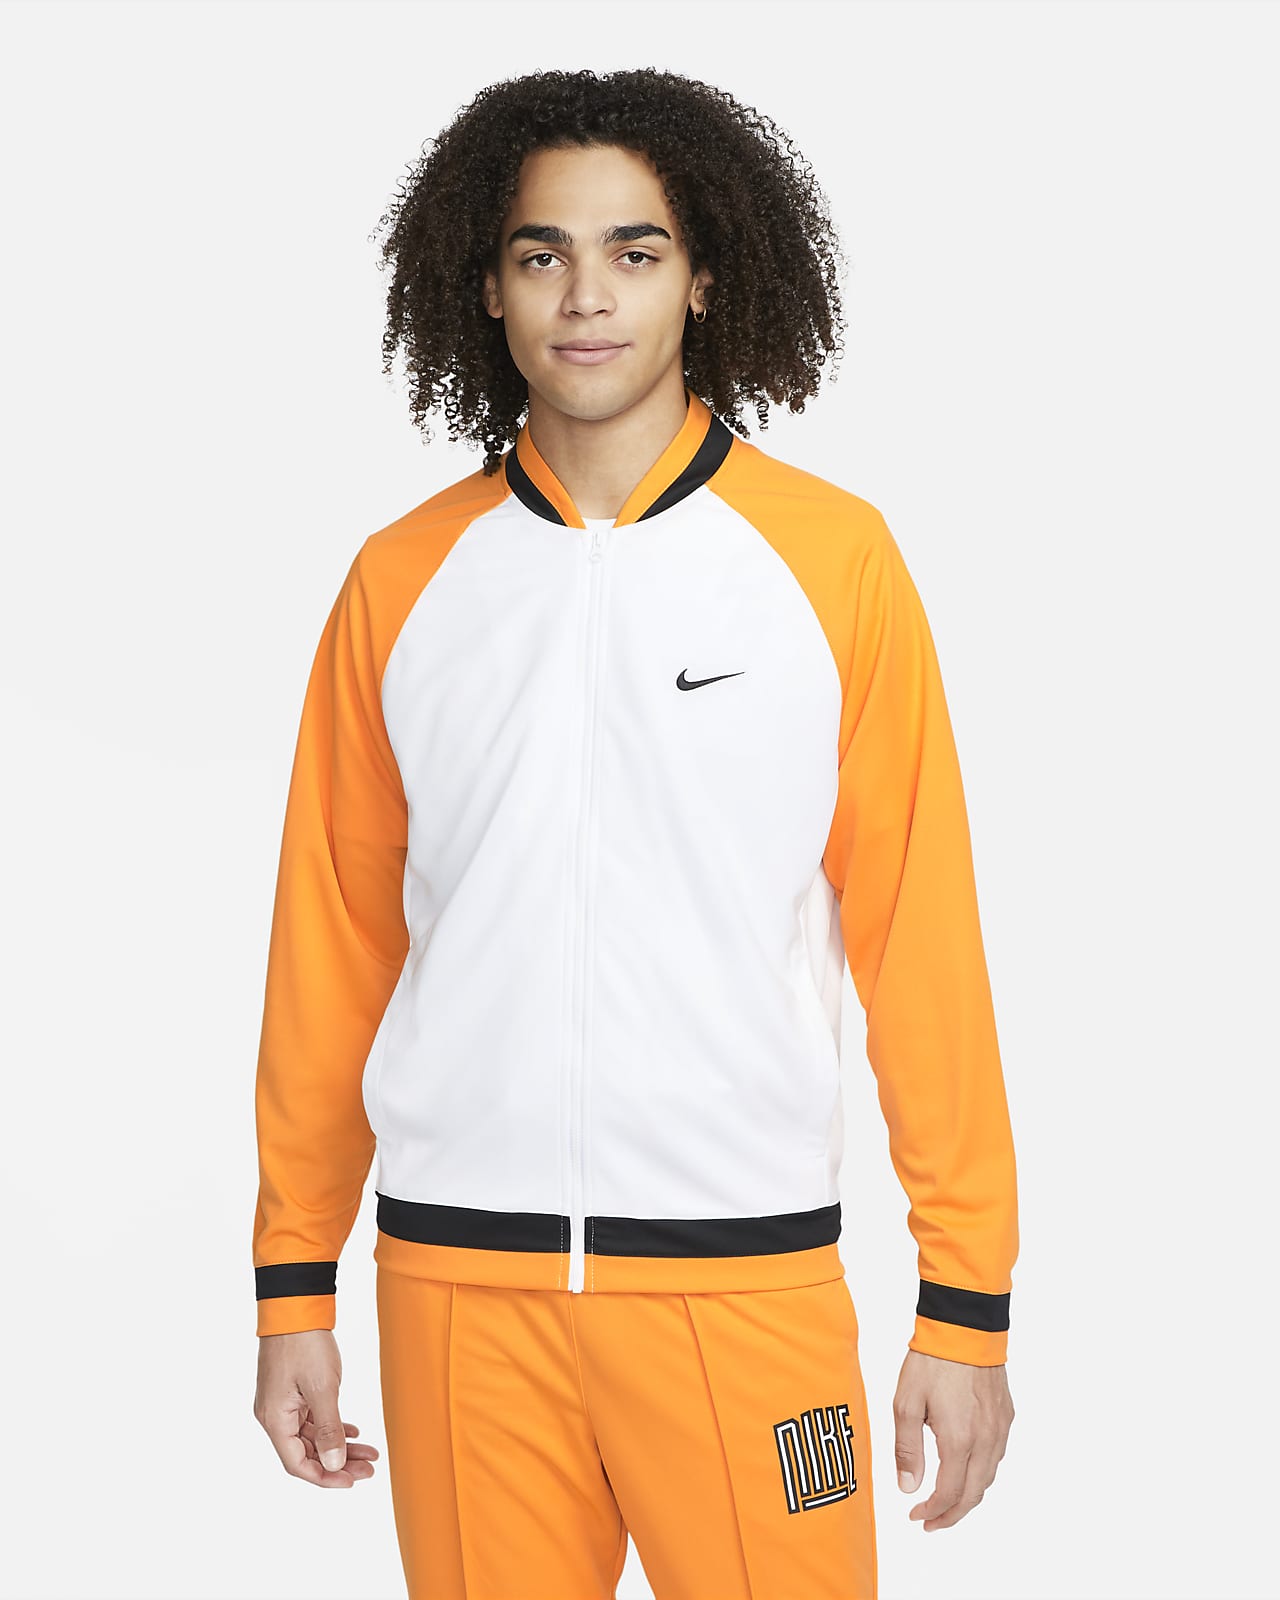 Nike Dri-FIT Men's Basketball Jacket